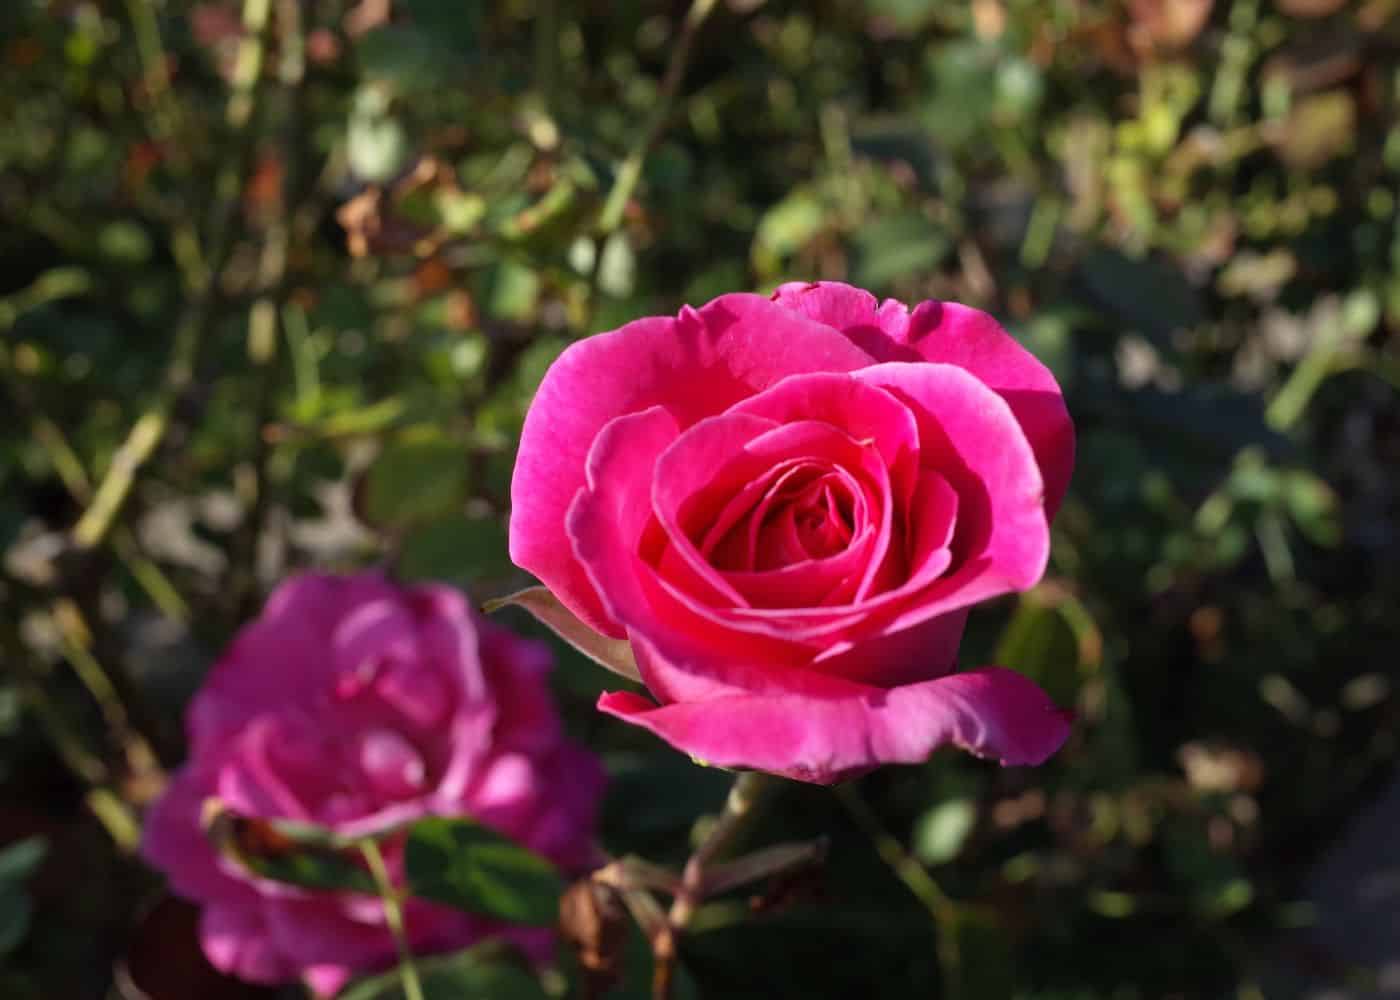 Pink peace rose